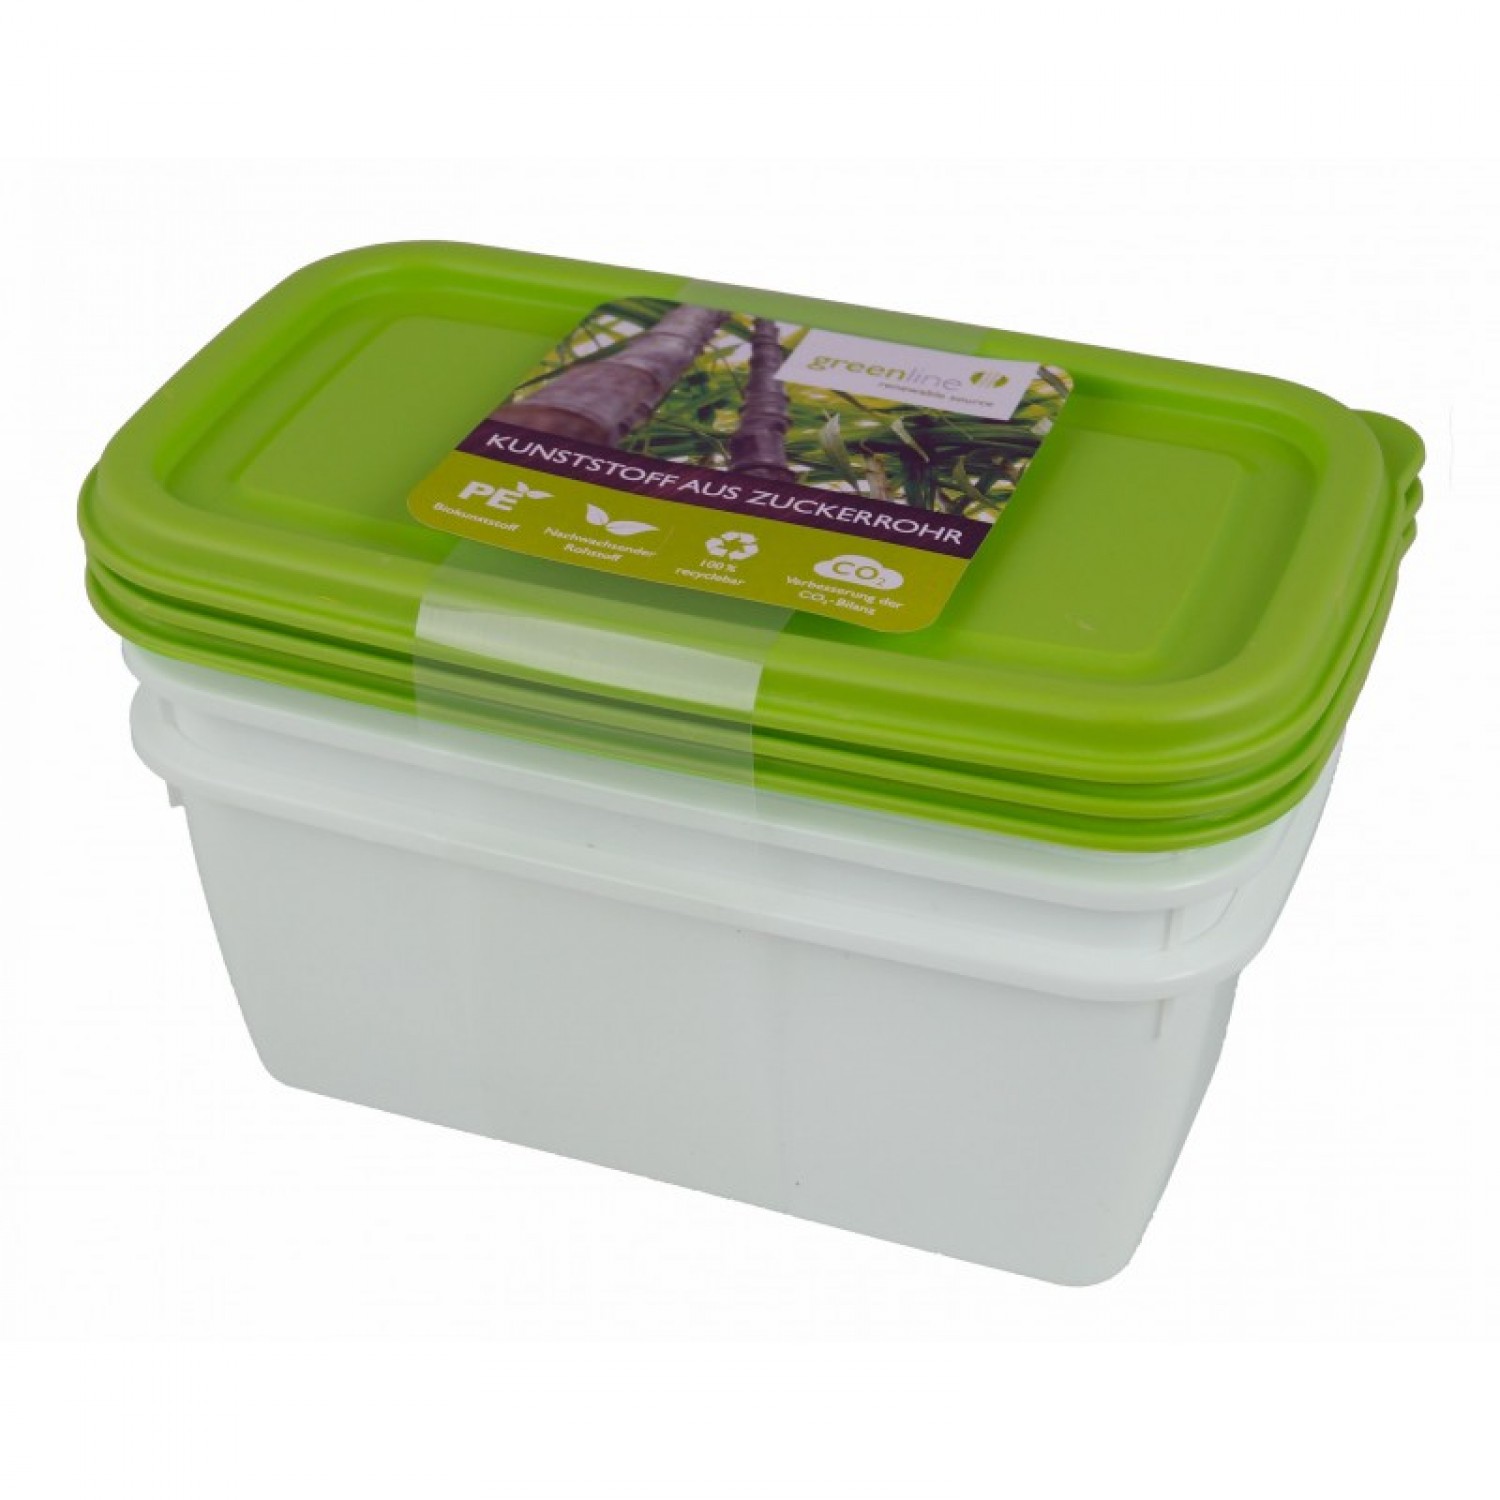 Greenline deep-freeze food box 0.75 l in 3-part set | Gies